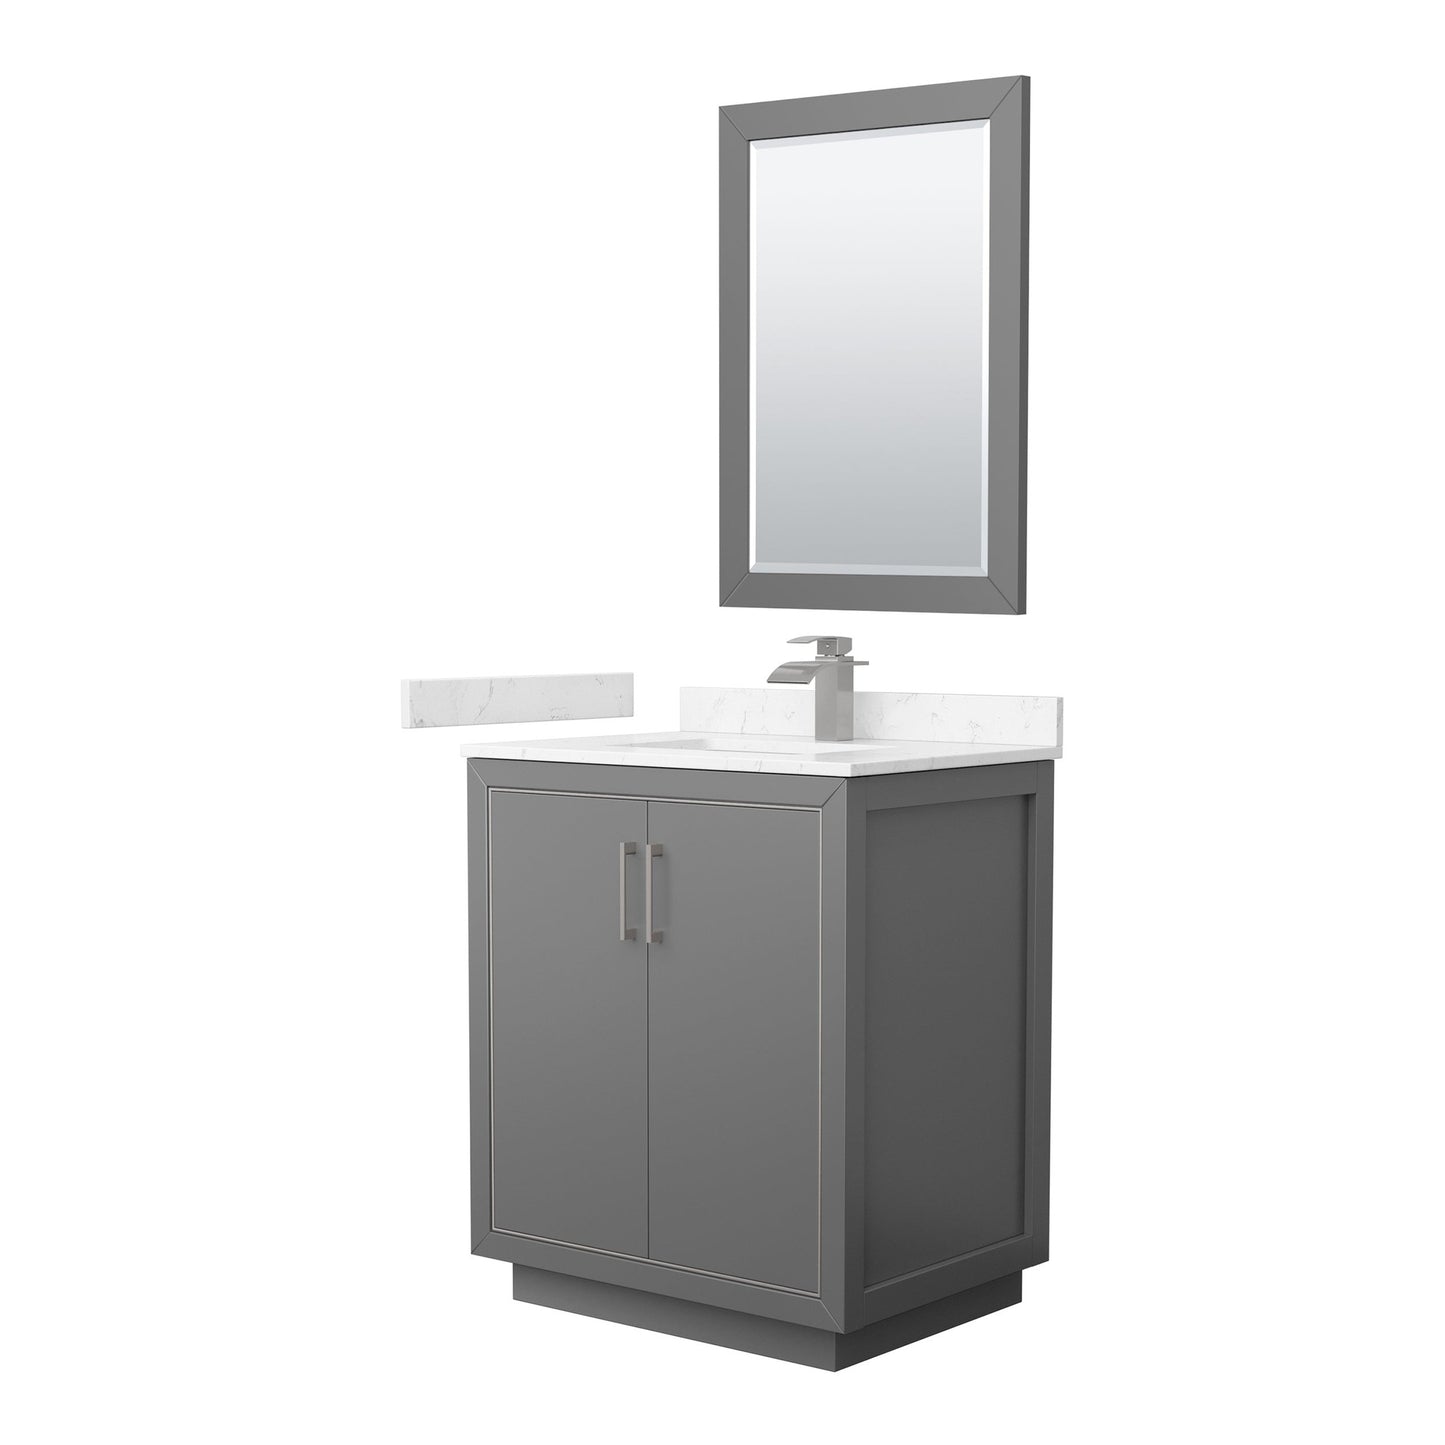 Wyndham Collection Icon 30" Single Bathroom Vanity in Dark Gray, Carrara Cultured Marble Countertop, Undermount Square Sink, Brushed Nickel Trim, 24" Mirror